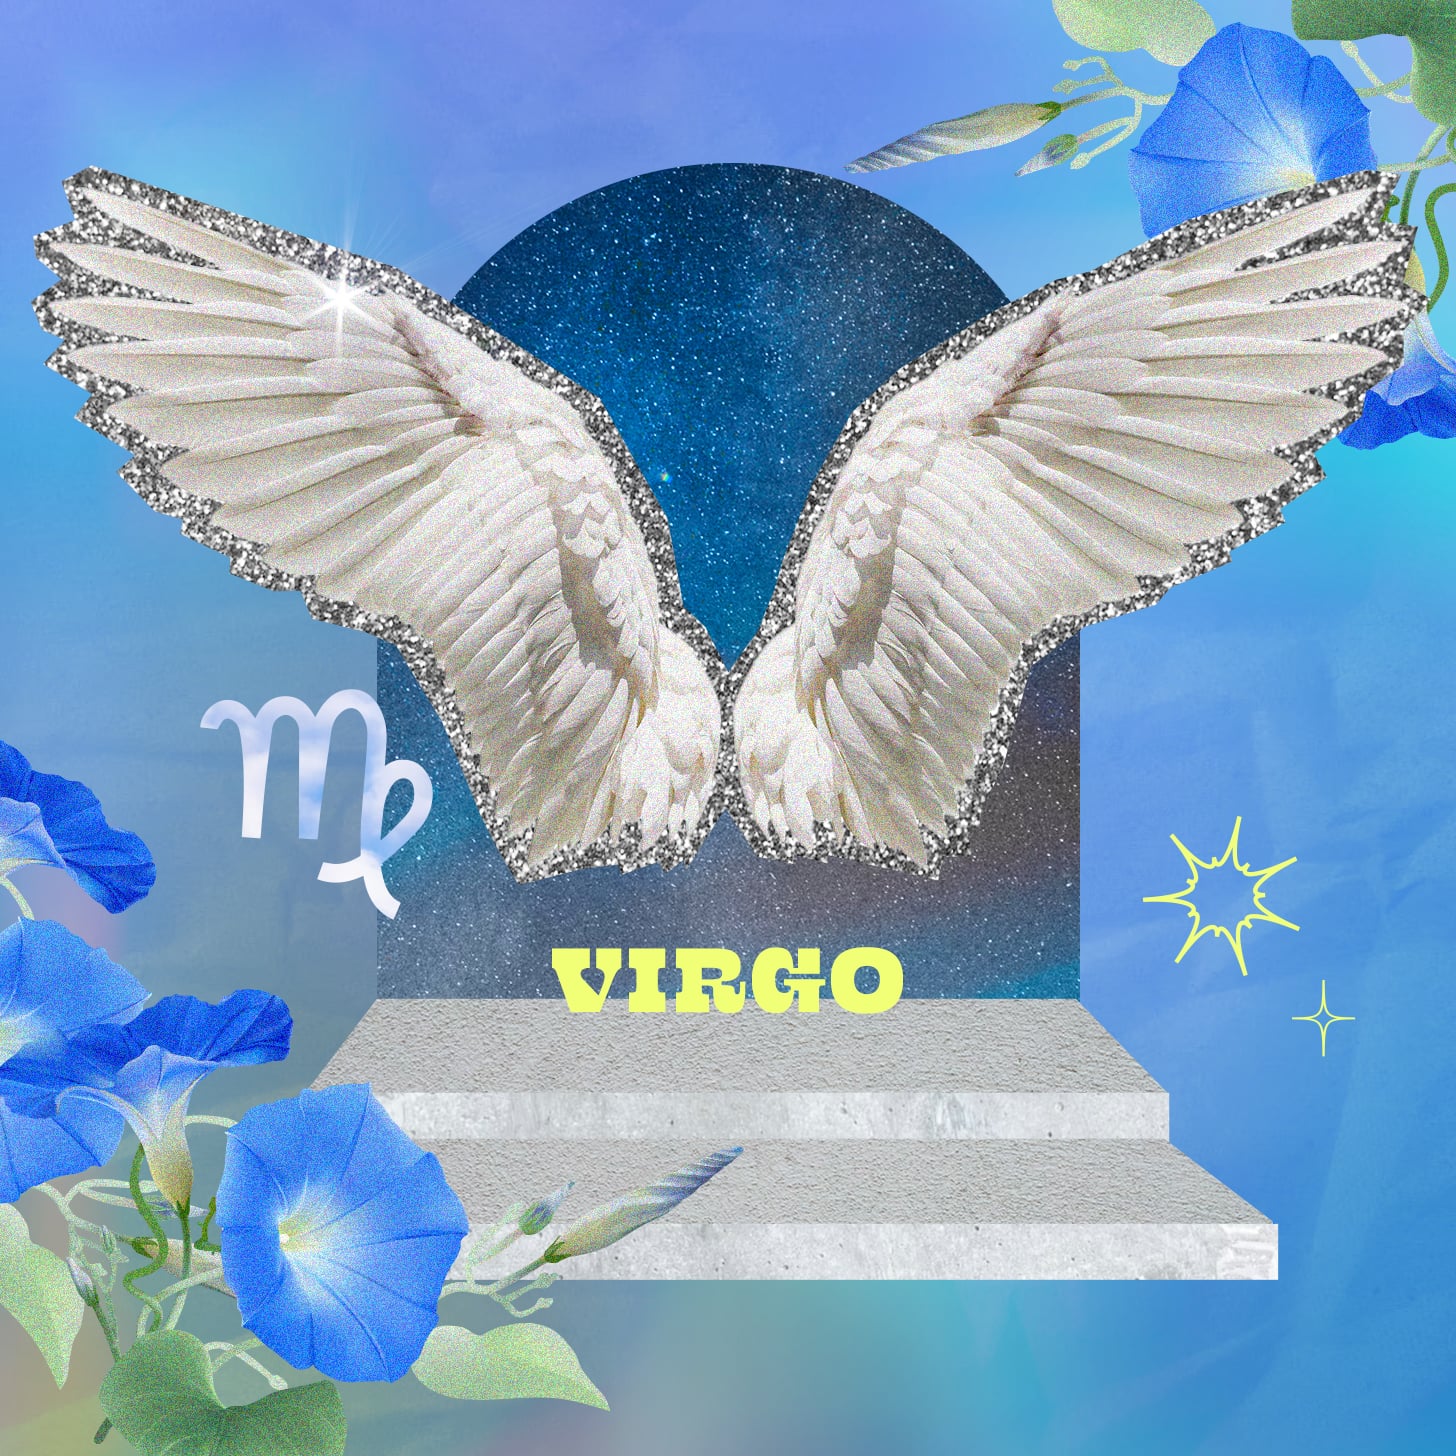 Virgo weekly horoscope for October 2, 2022